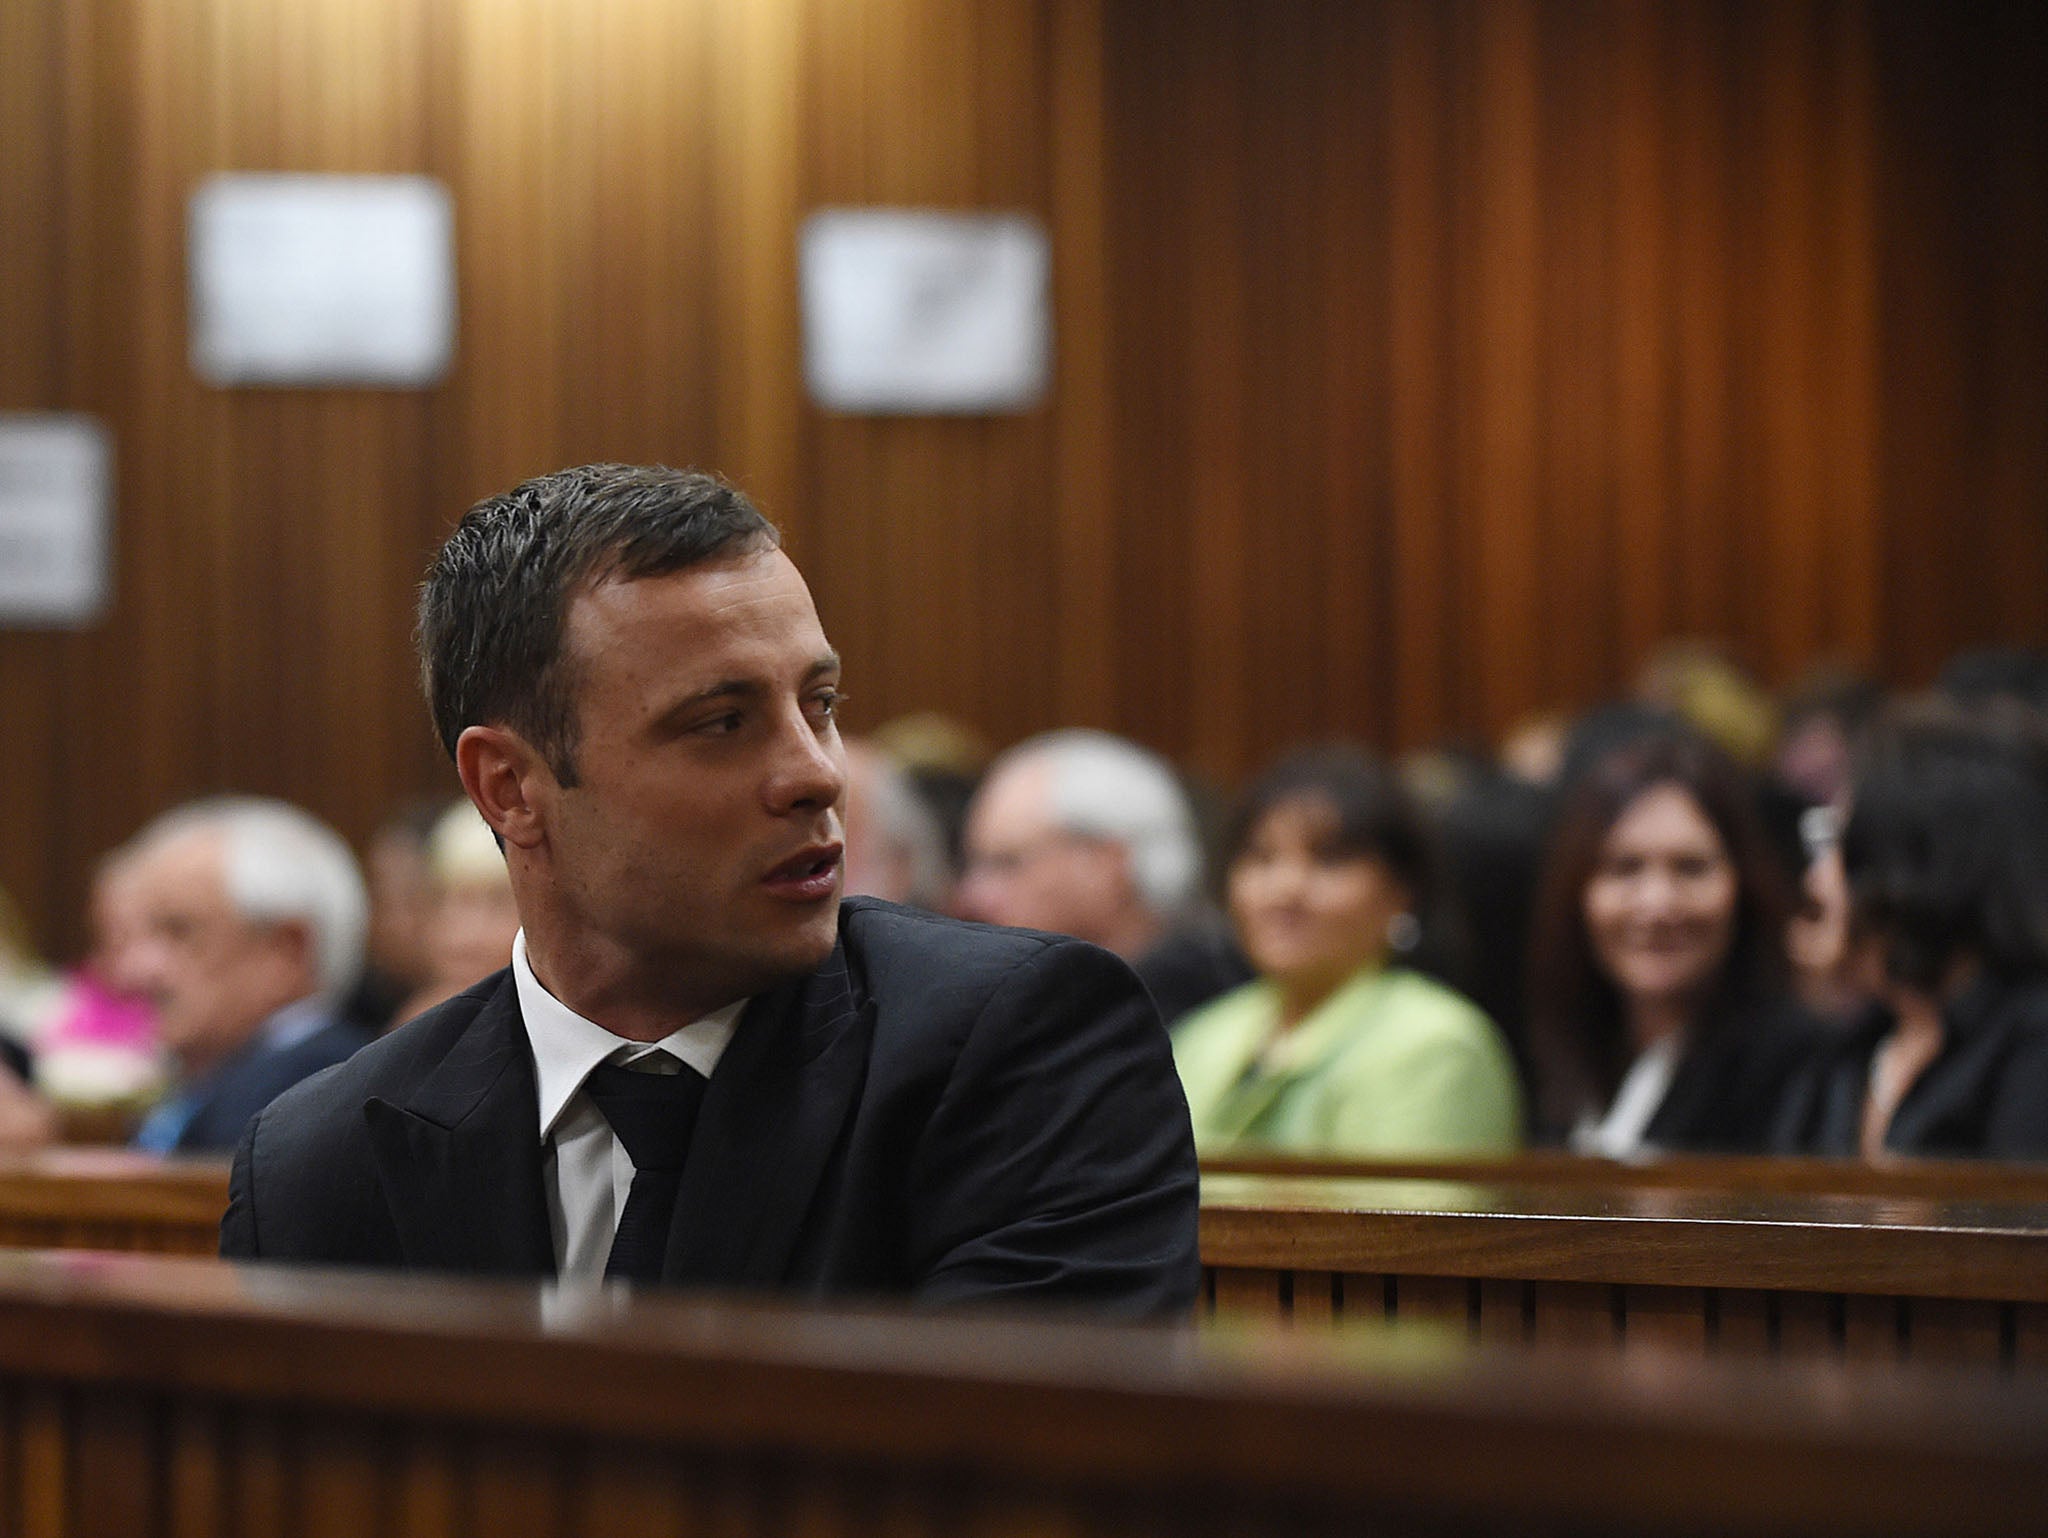 Oscar Pistorius verdict: Athlete guilty of firing gun in restaurant